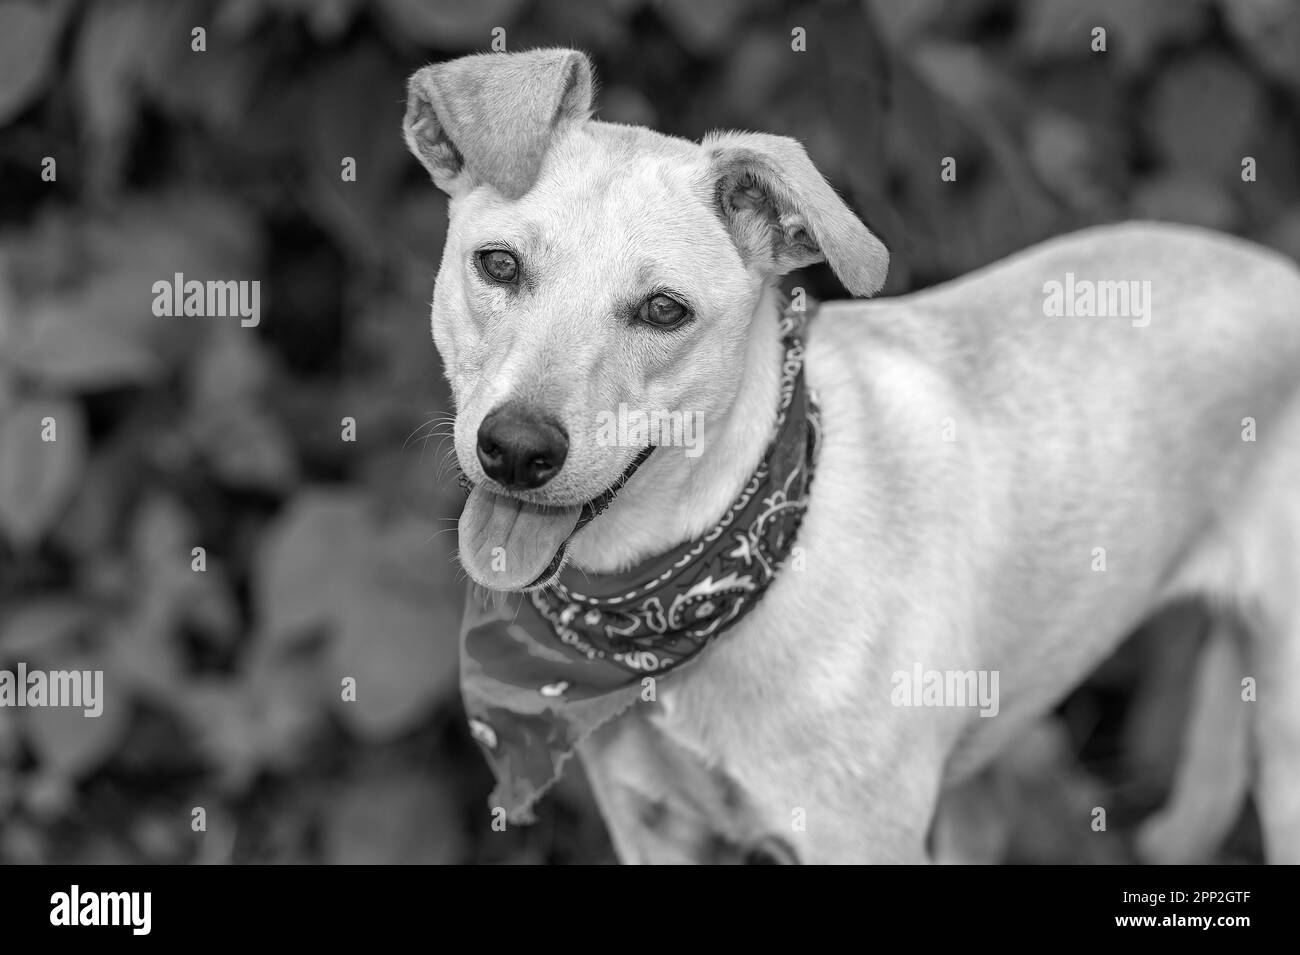 A Closeup Of A Rescue Animal Dog Outdoors Wearing A Bandana Stock Photo